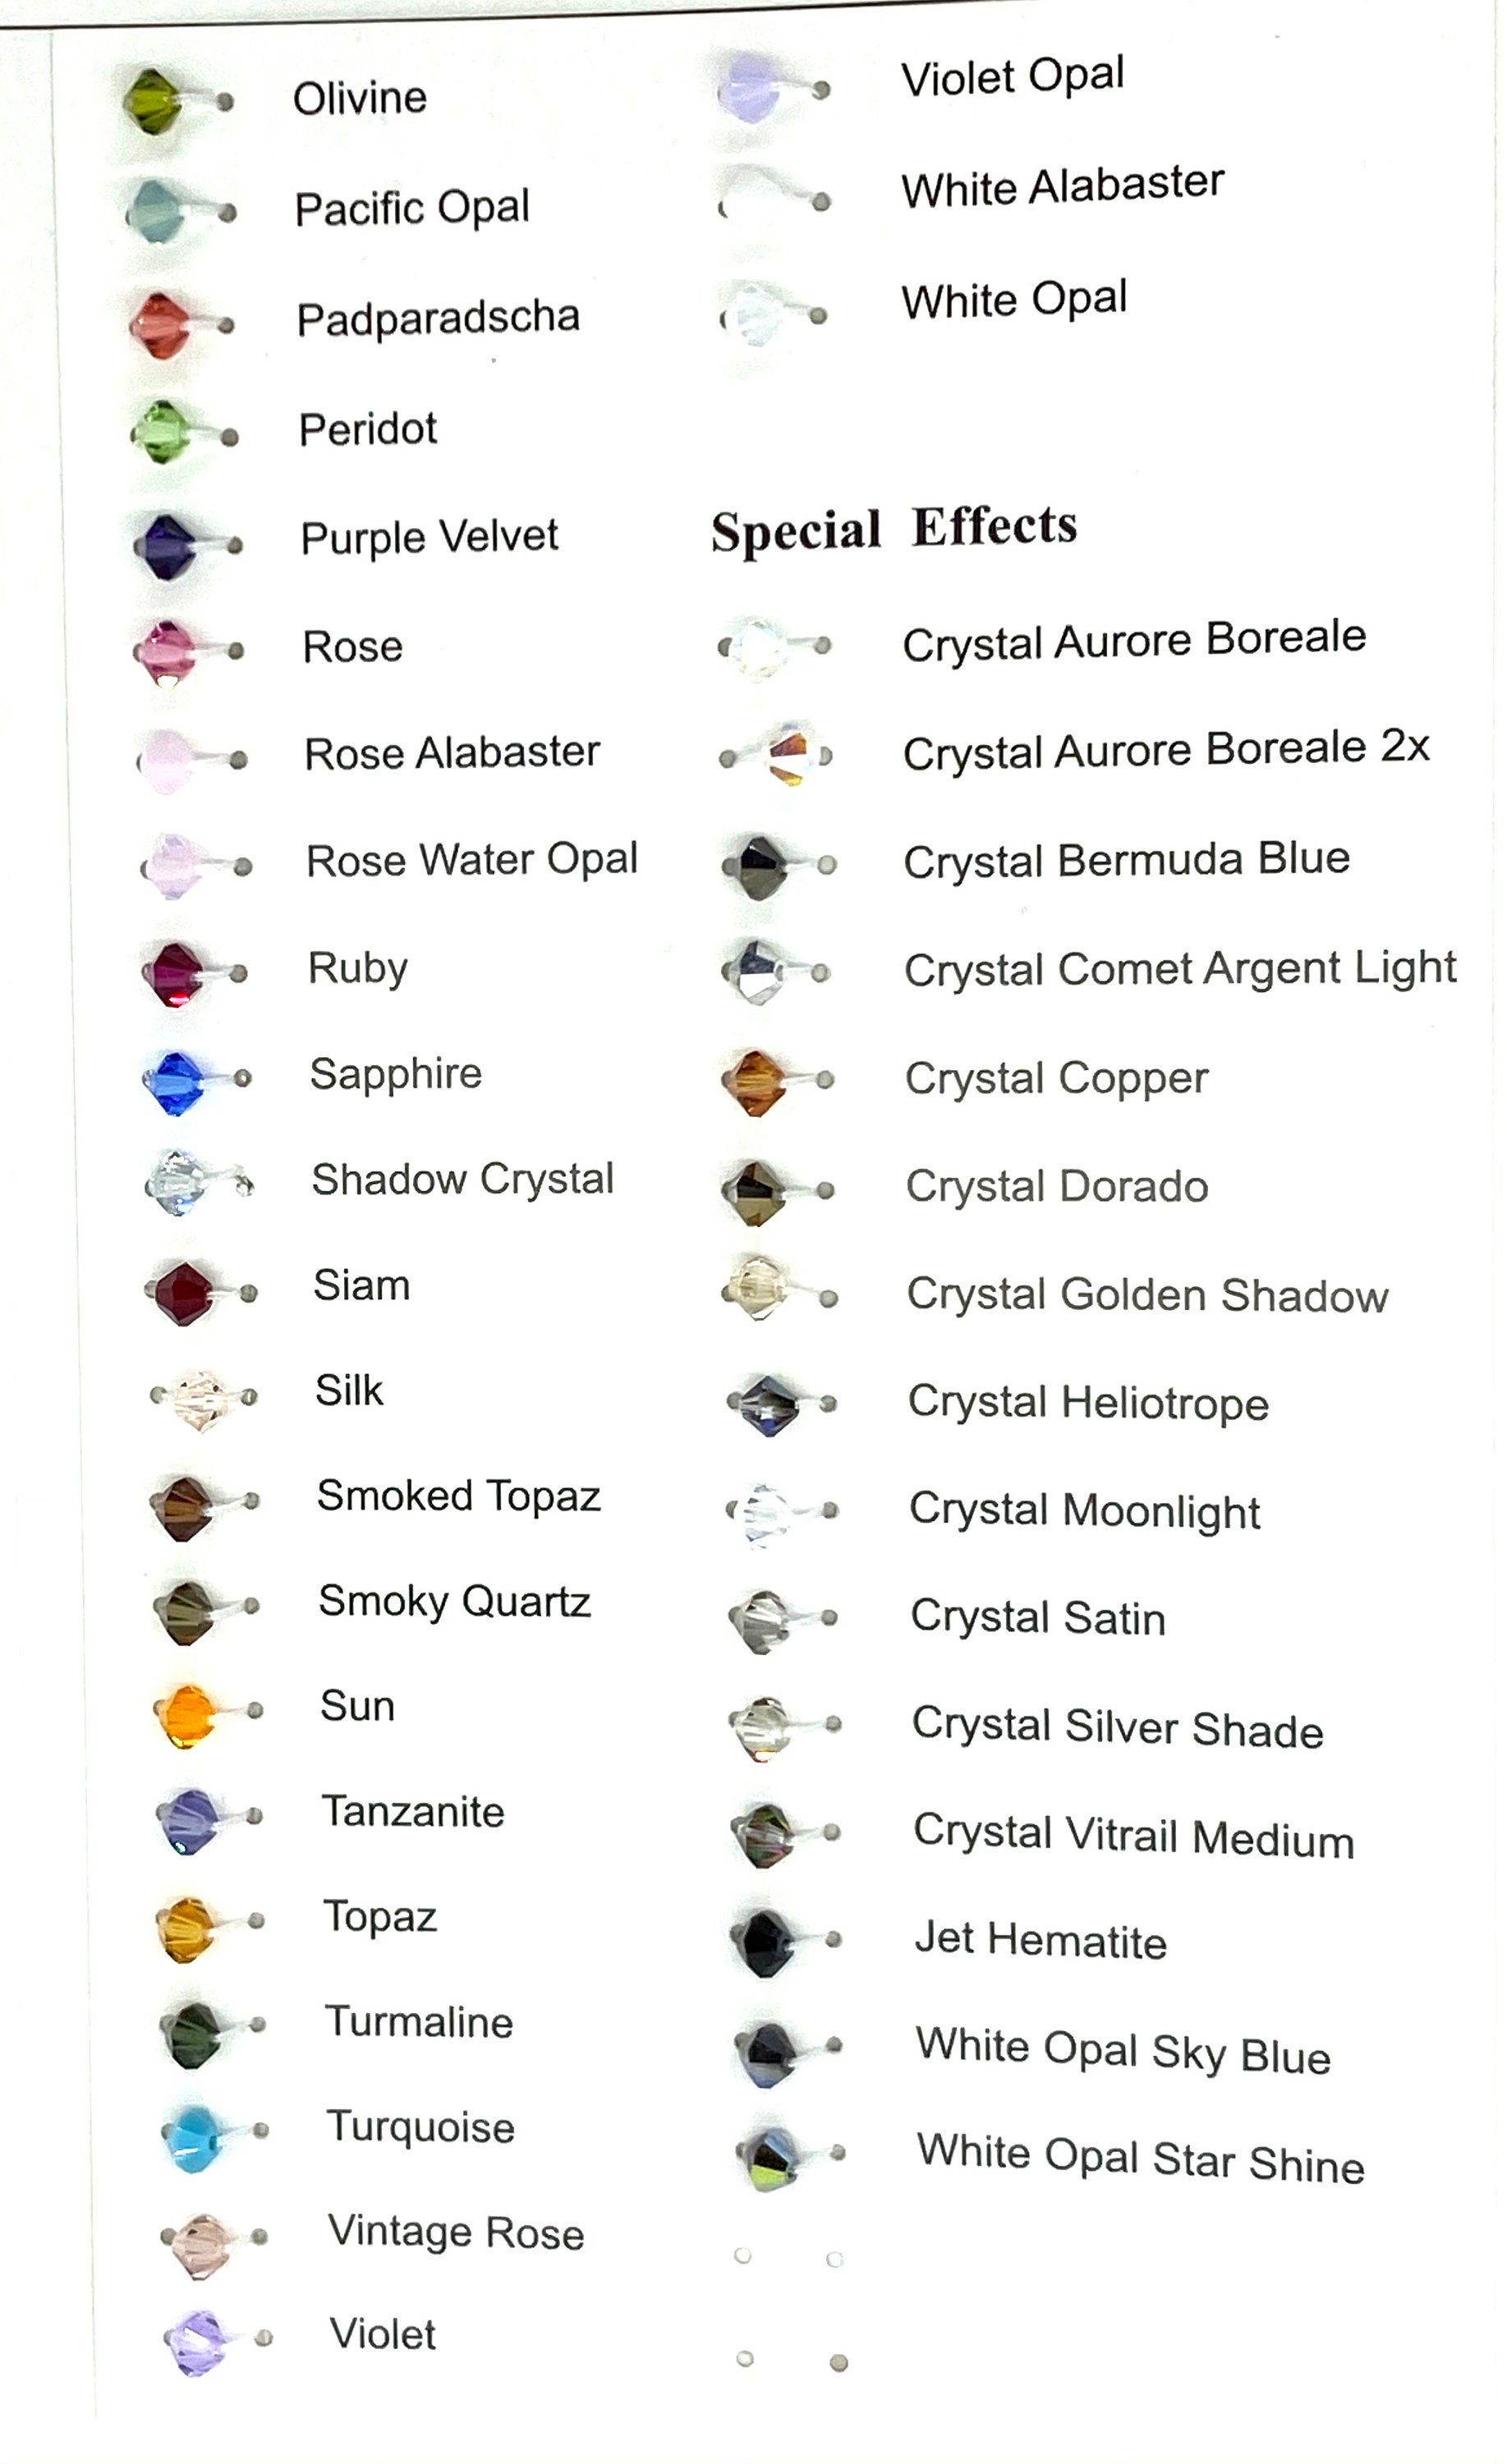 Swarovski Crystal AB Large Beads 5000 – Estate Beads & Jewelry